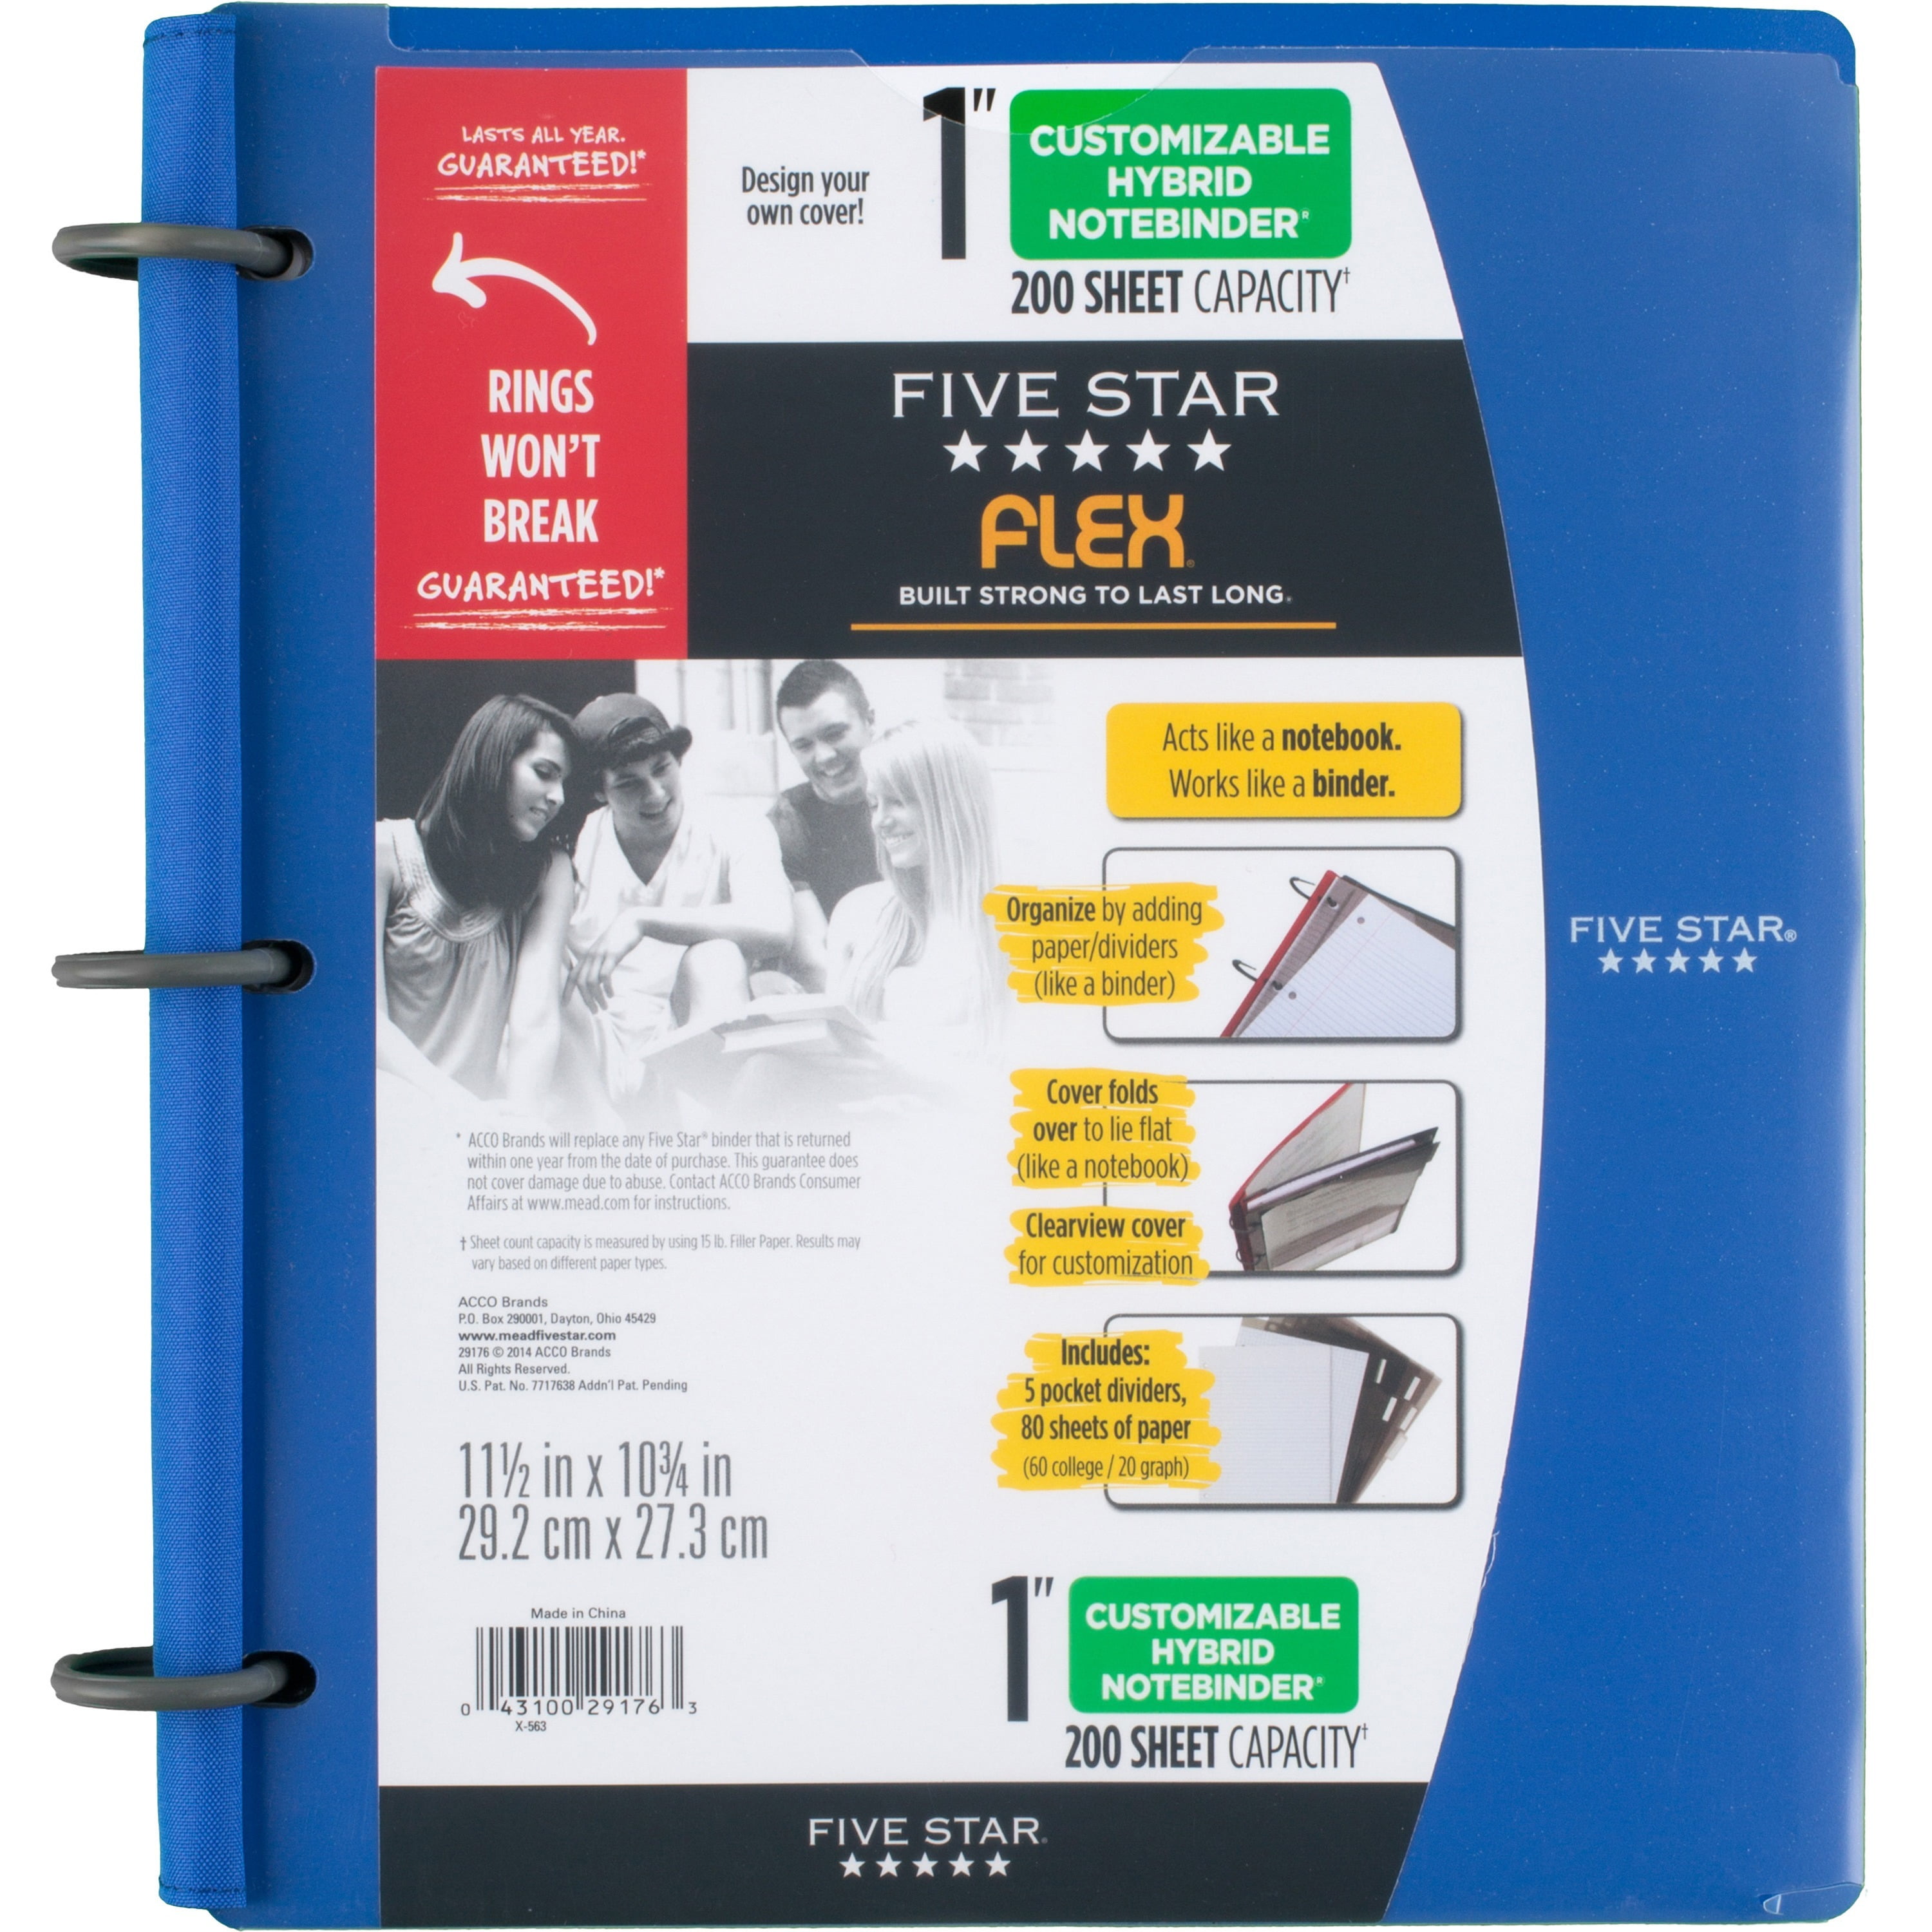 1 Inch Binder Details about   Five Star Flex Hybrid NoteBinder Notebook and Binder All-in-O... 